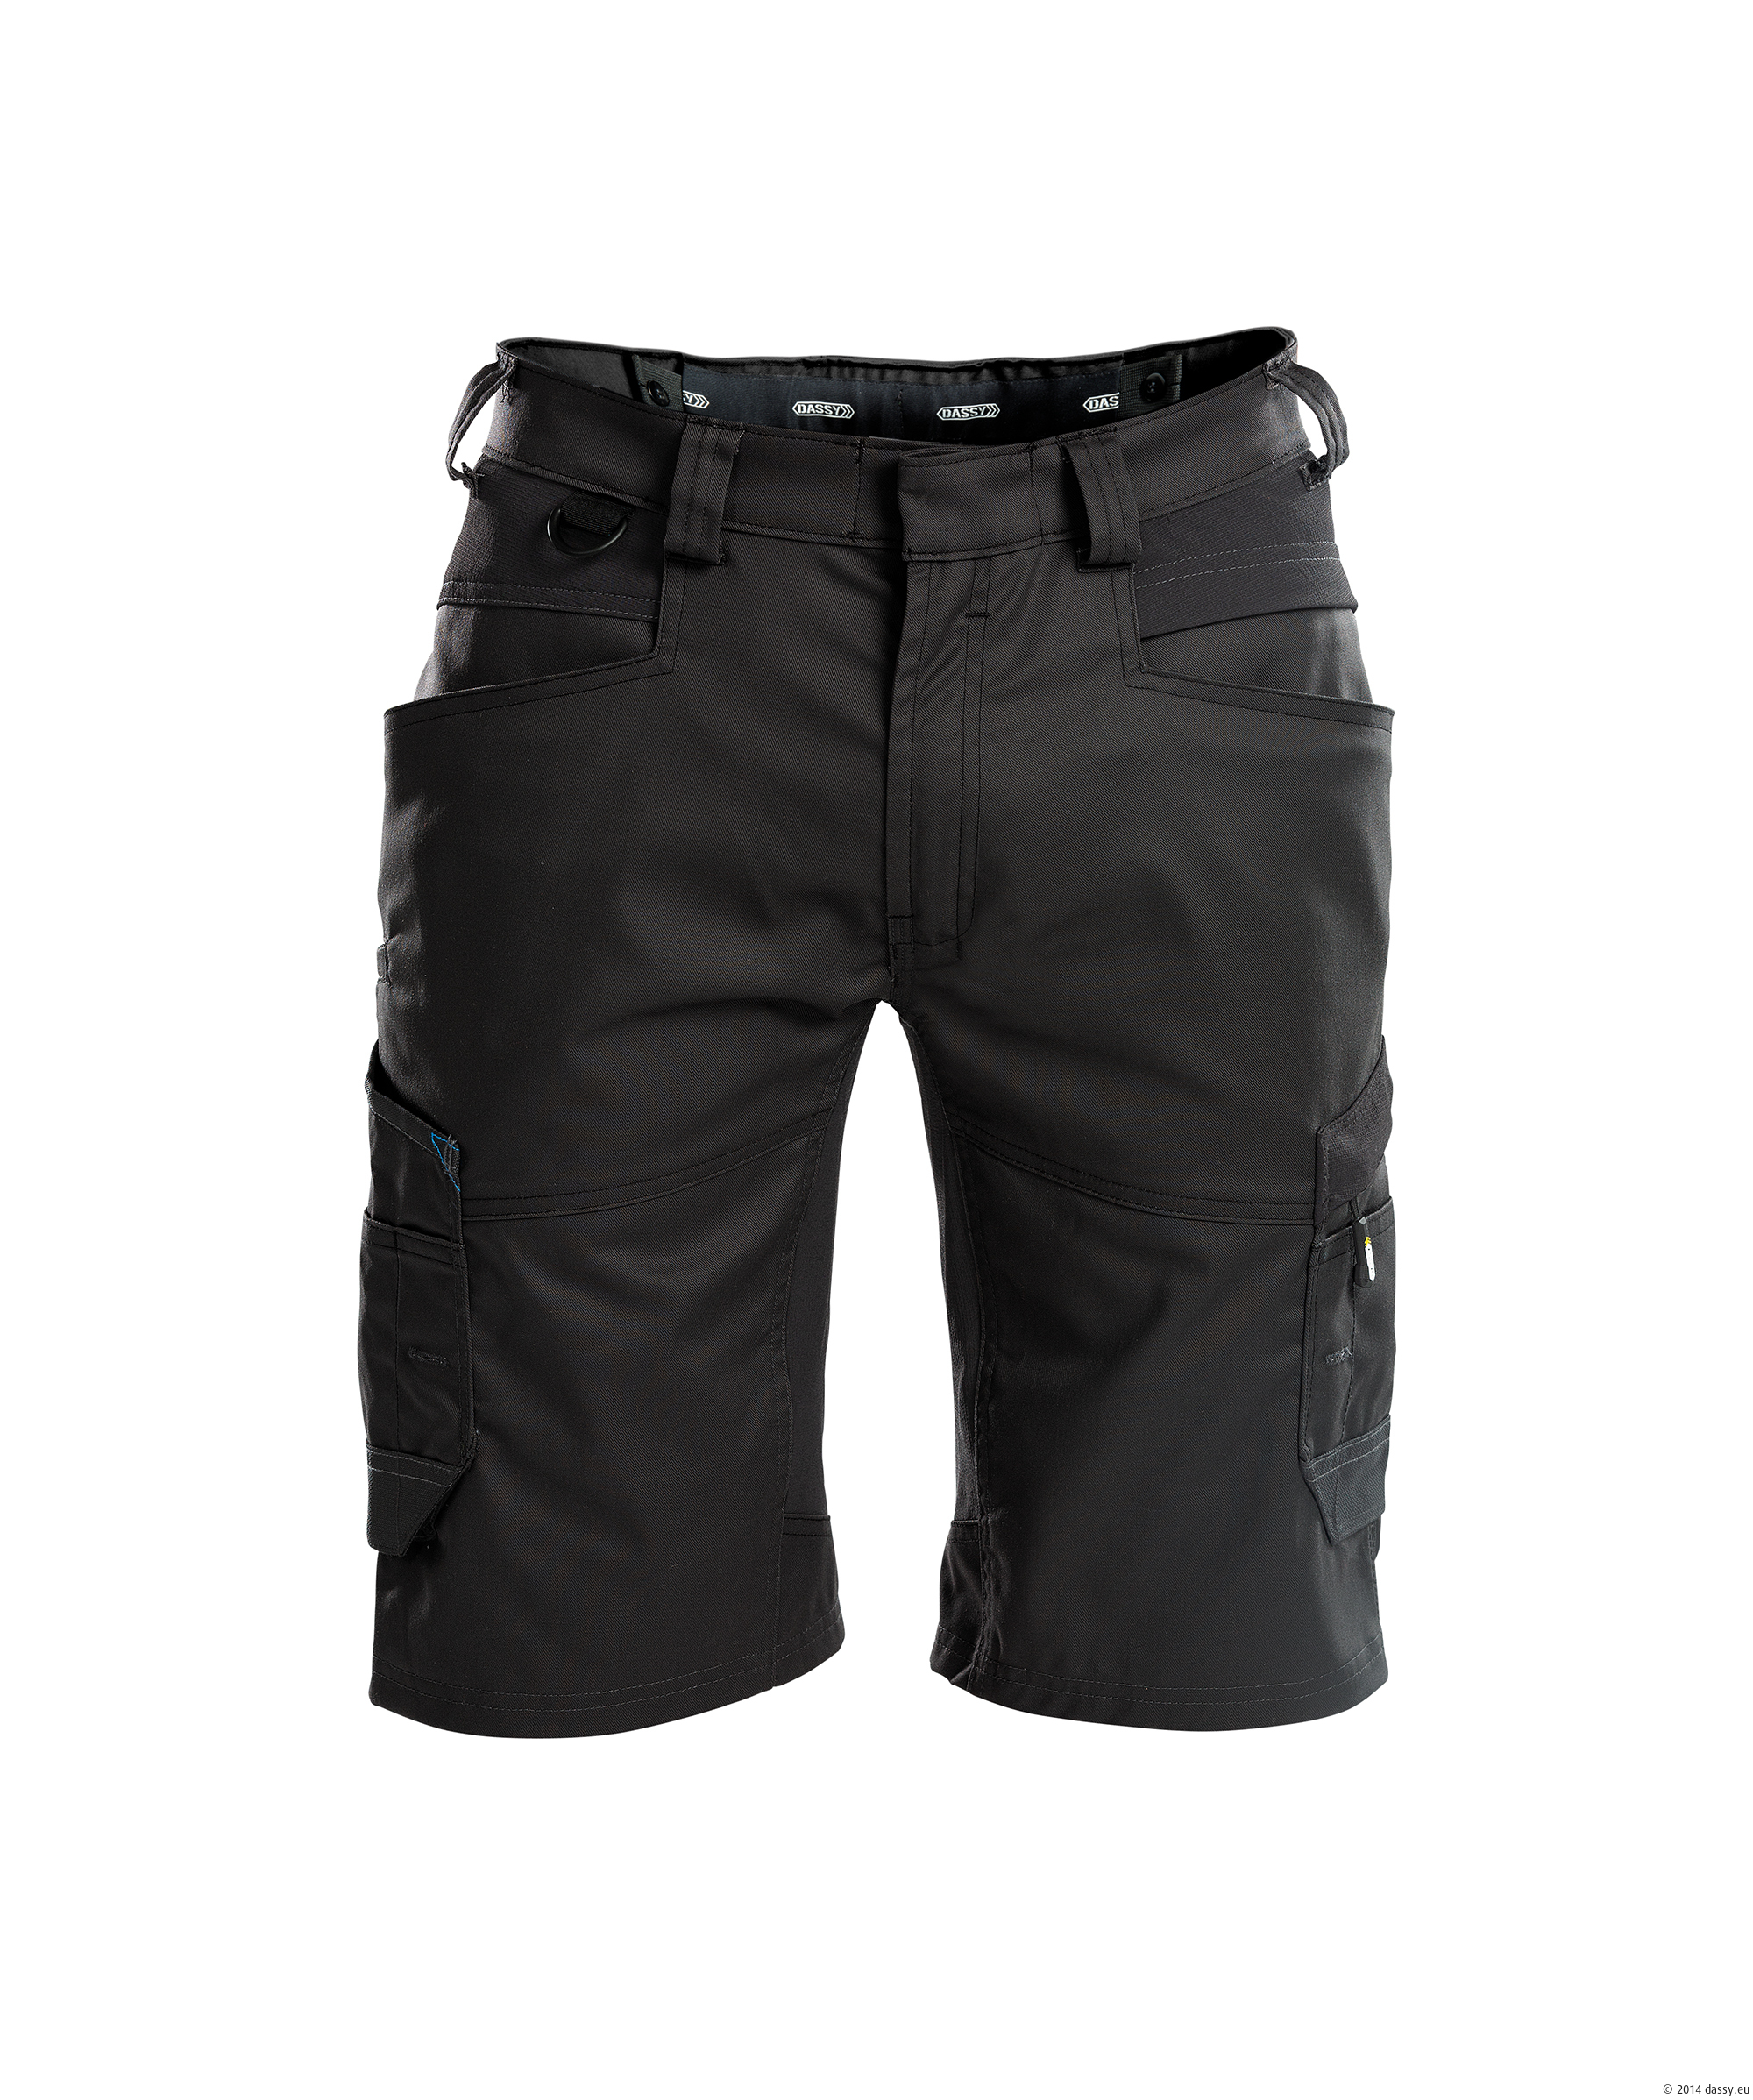 DASSY® Monza kurze Hose Shorts Bermuda Zweifarbige Multitaschen-Shorts Herren 